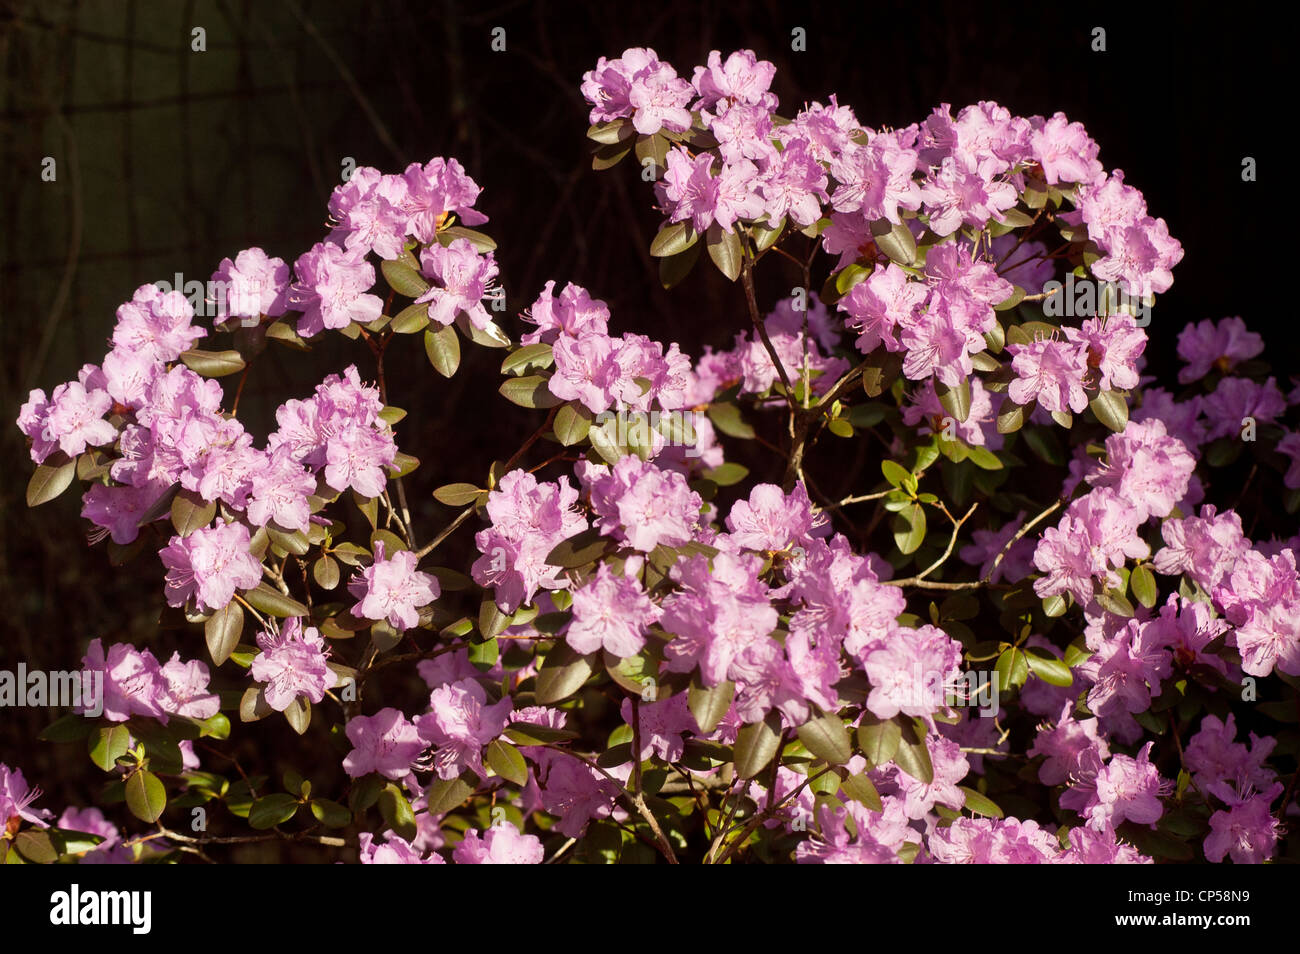 Pink violet flowers of Azalea, Rhododendron, flower, bloom, blossom, petals, cultivar, horticulture, gardening, plant, garden Stock Photo